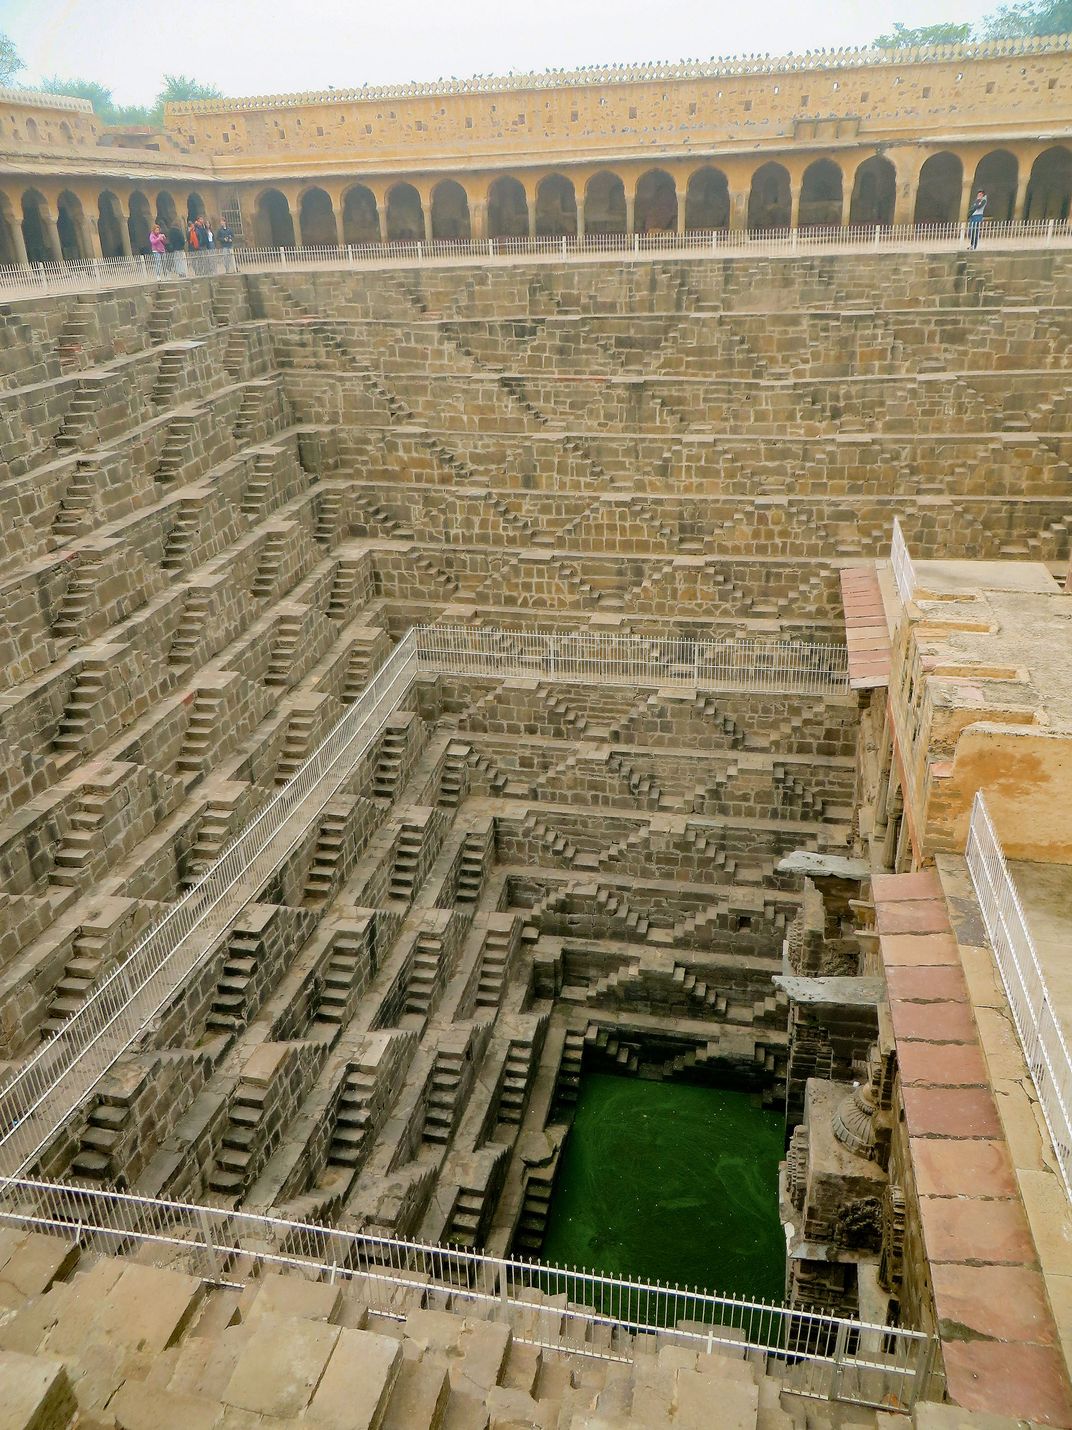 Photos Capture India's Ancient, Vanishing Stepwells